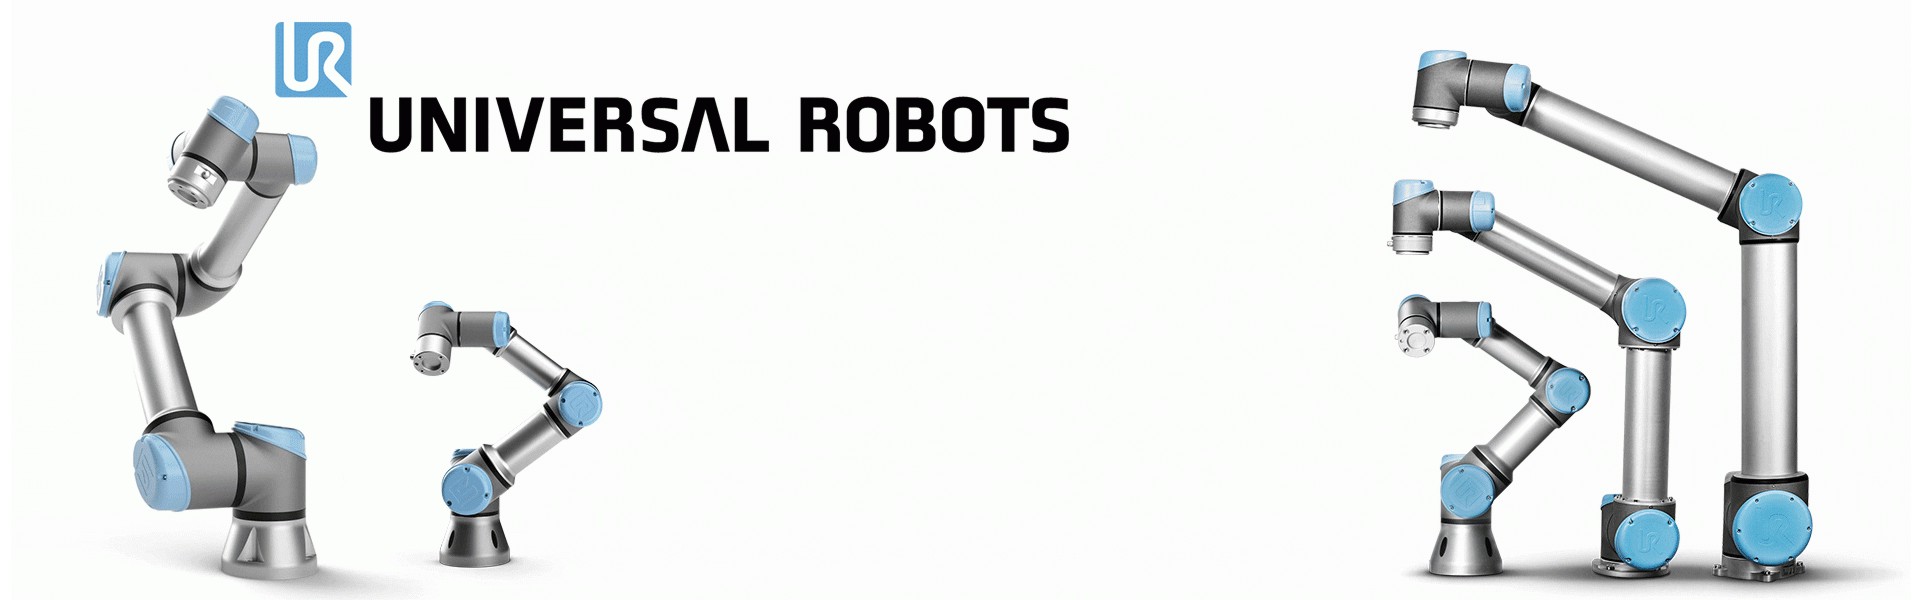 universal-robots-banner-lbm-oprema